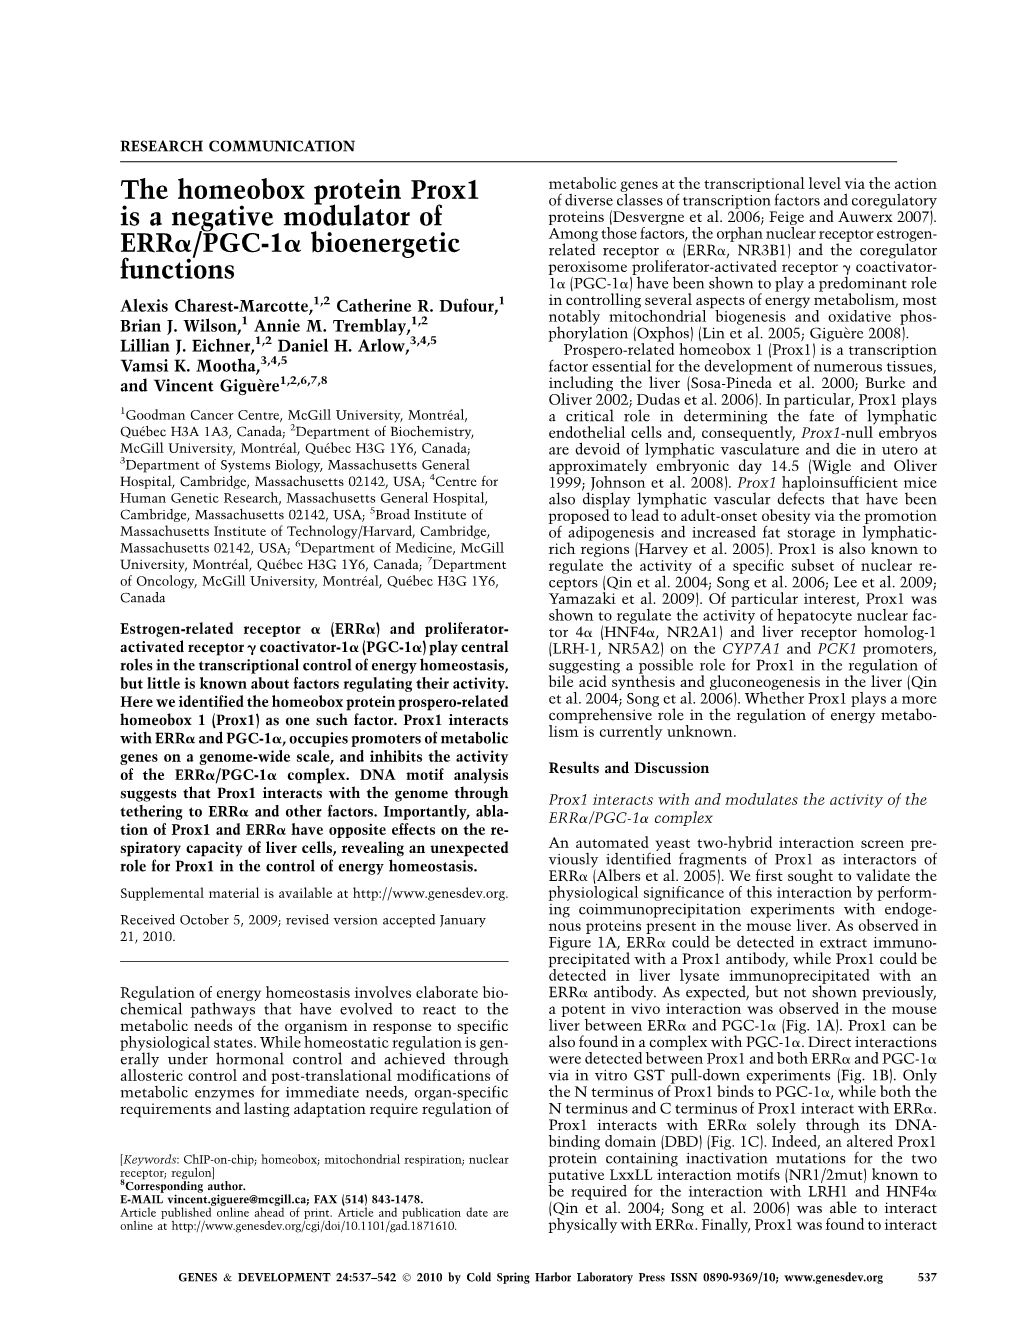 The Homeobox Protein Prox1 Is a Negative Modulator of Erra/PGC